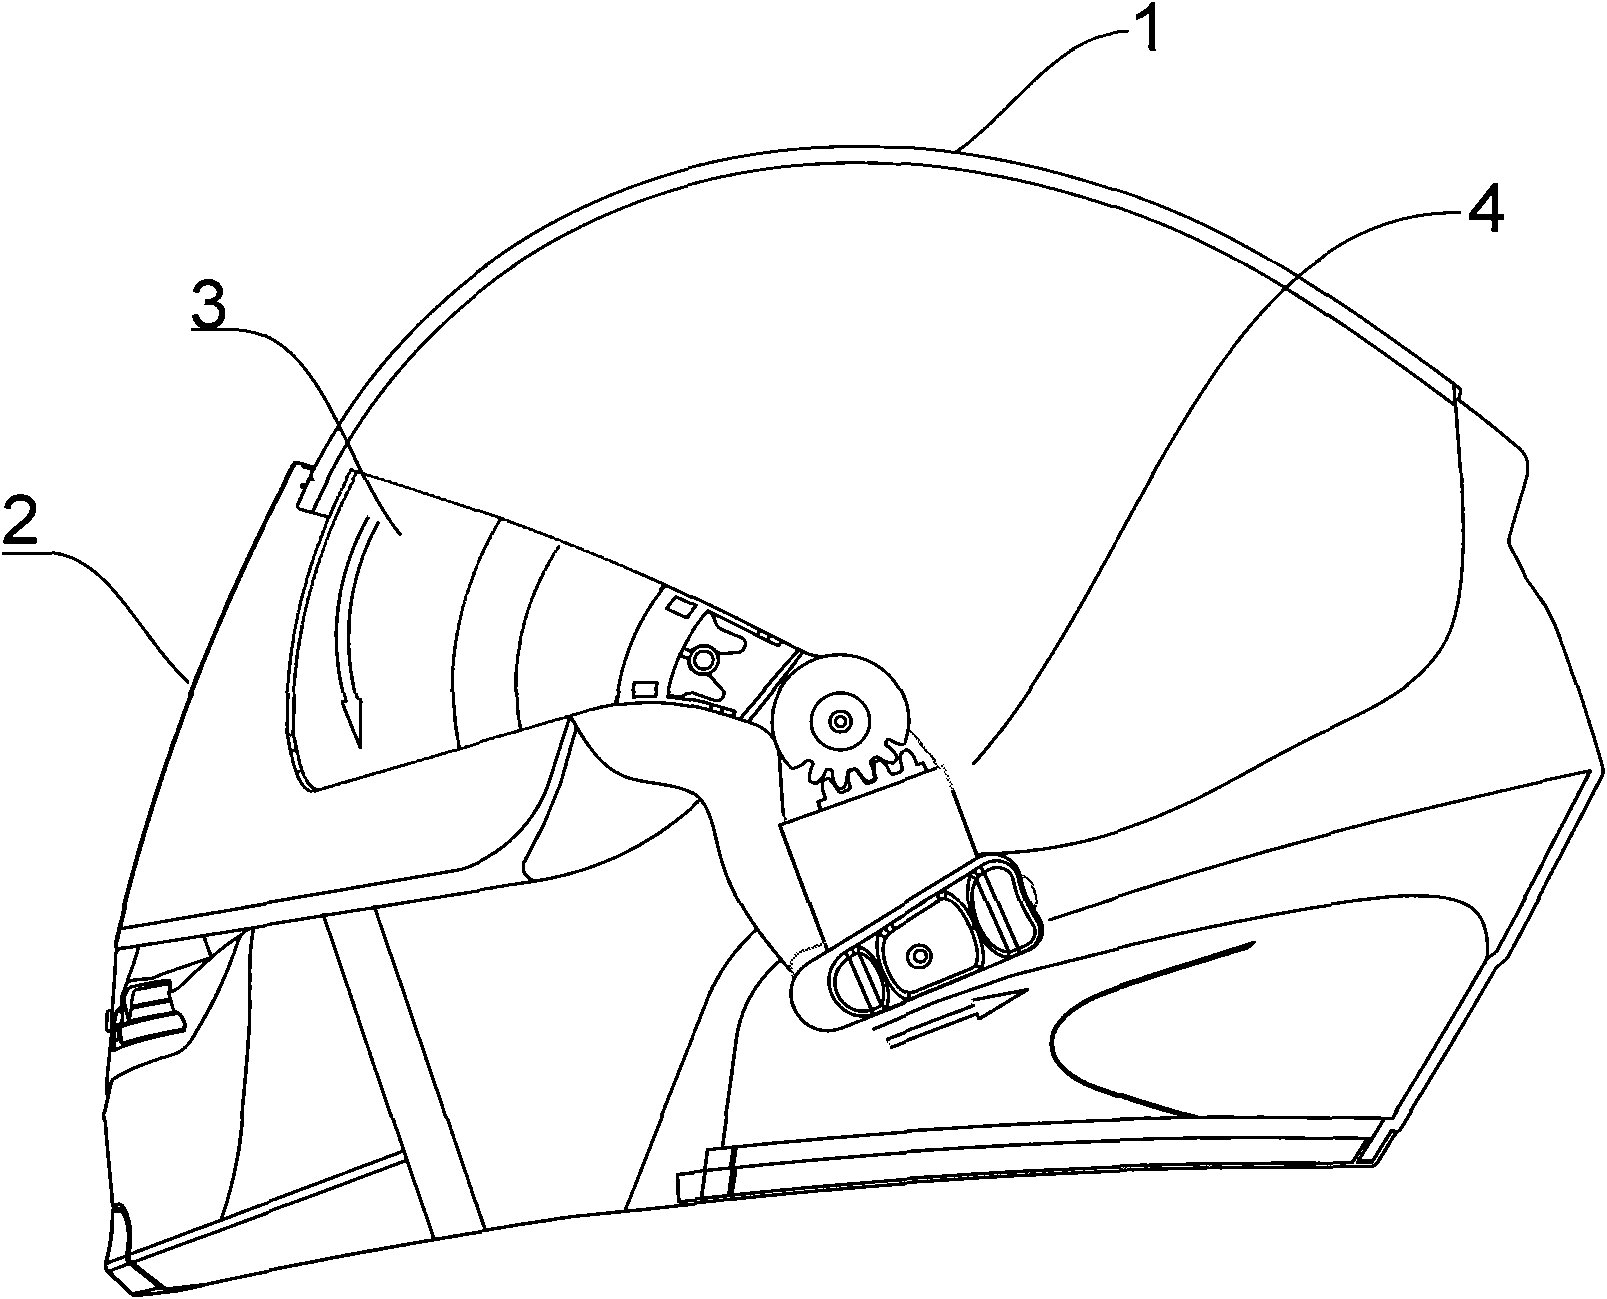 Helmet lens position adjustment device and helmet